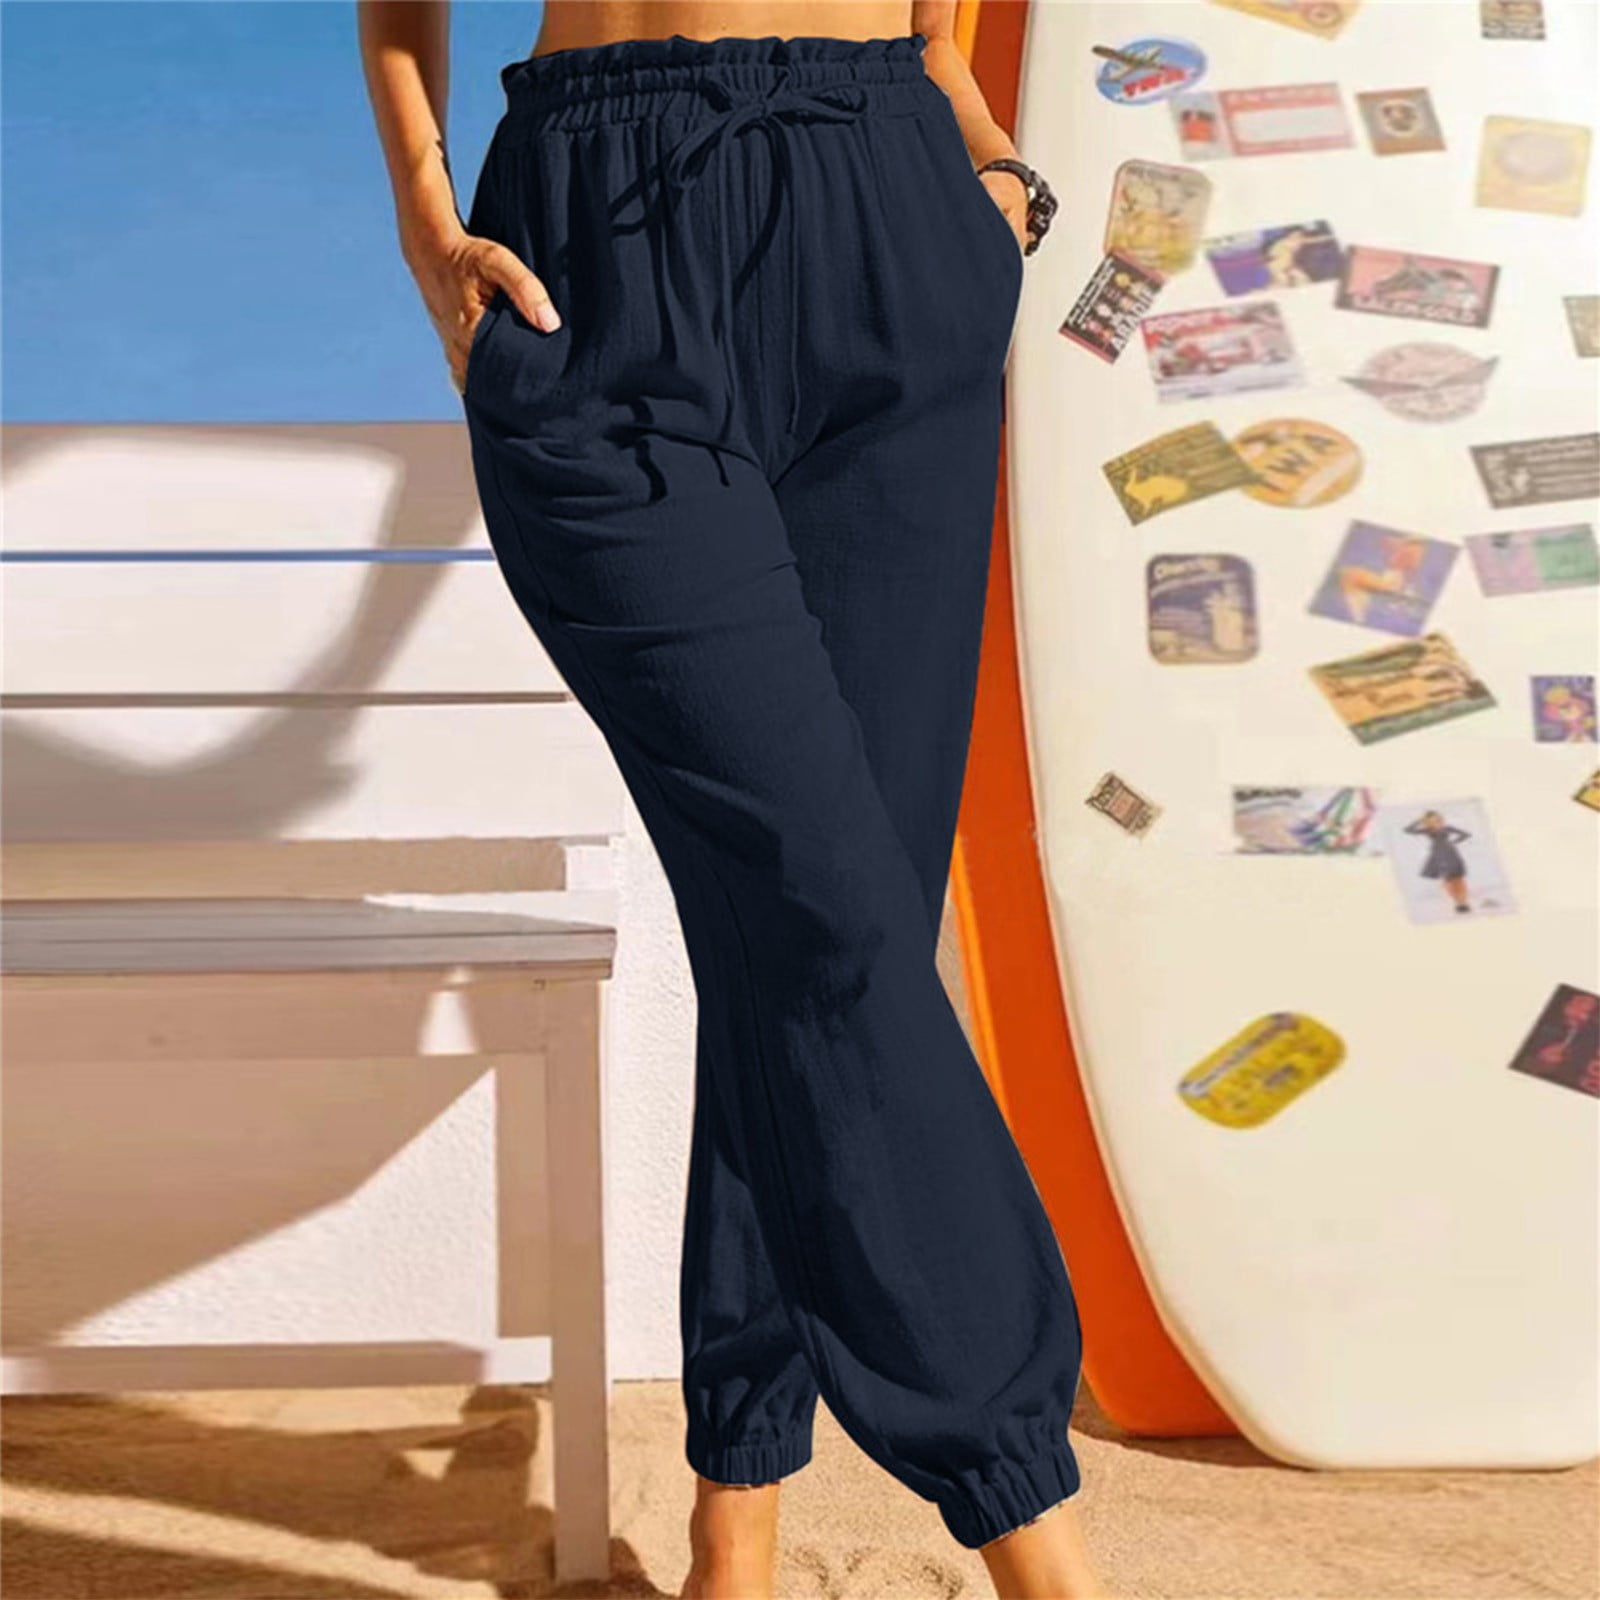 Cotton Linen Pants Womens Summer Fashion Ruffle High Waisted Solid